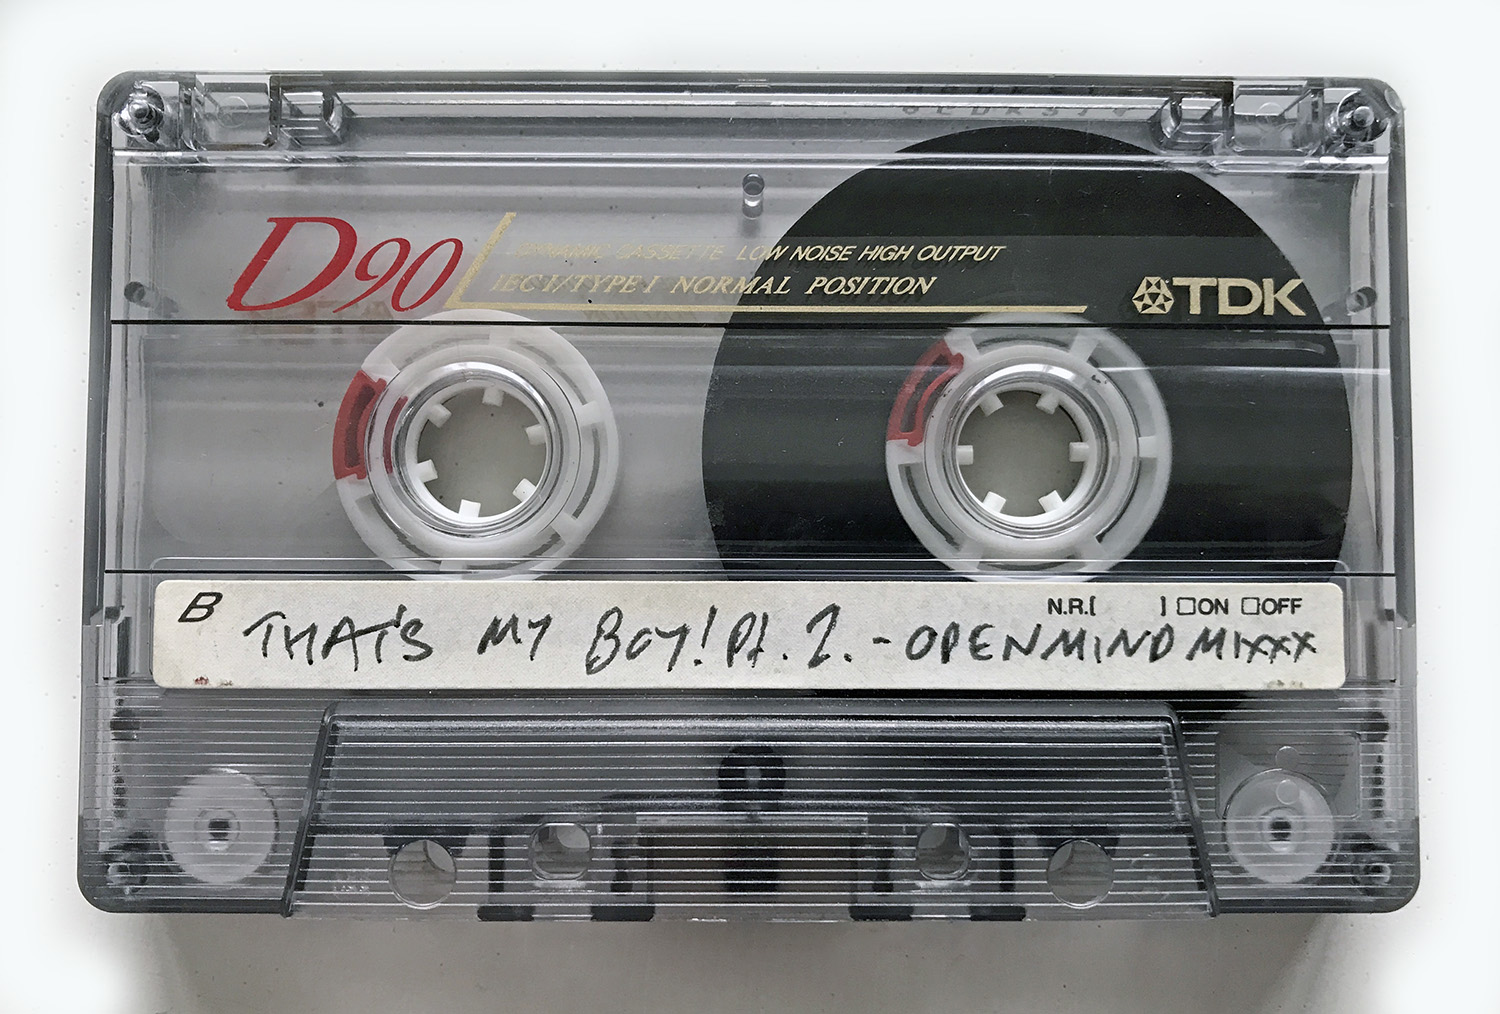 MS196 Openmind - That's My Boy! Pt.2 (side B) - Live Mixxx 26:05:1994